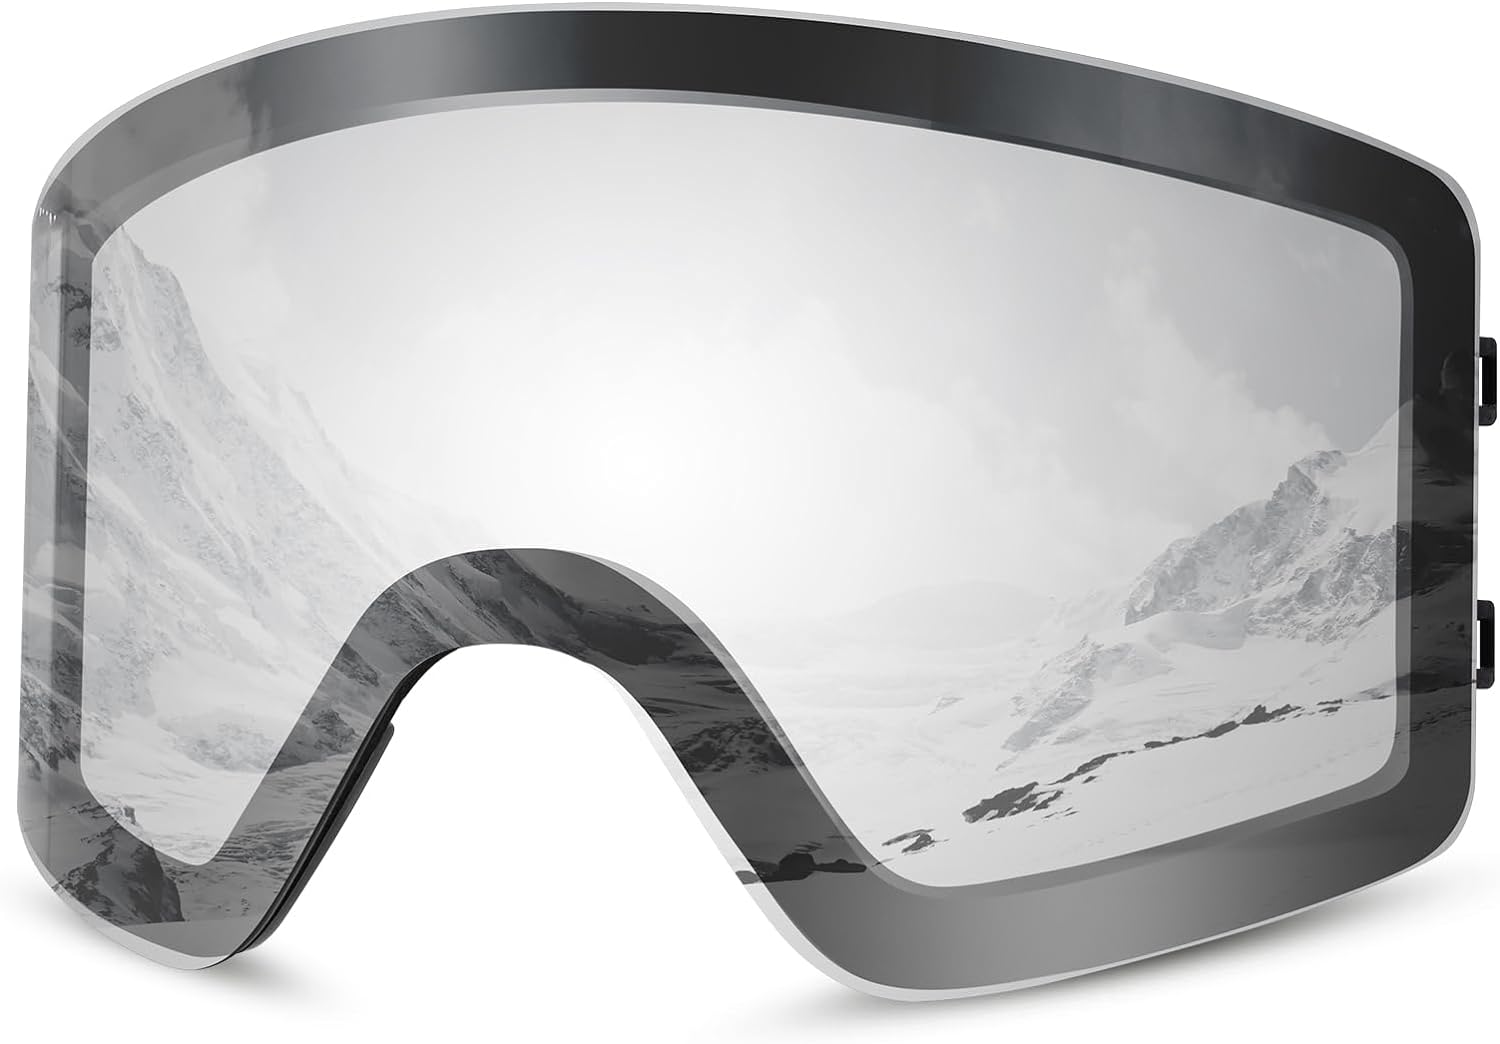 Odoland Ski Goggles Set with Detachable Lens